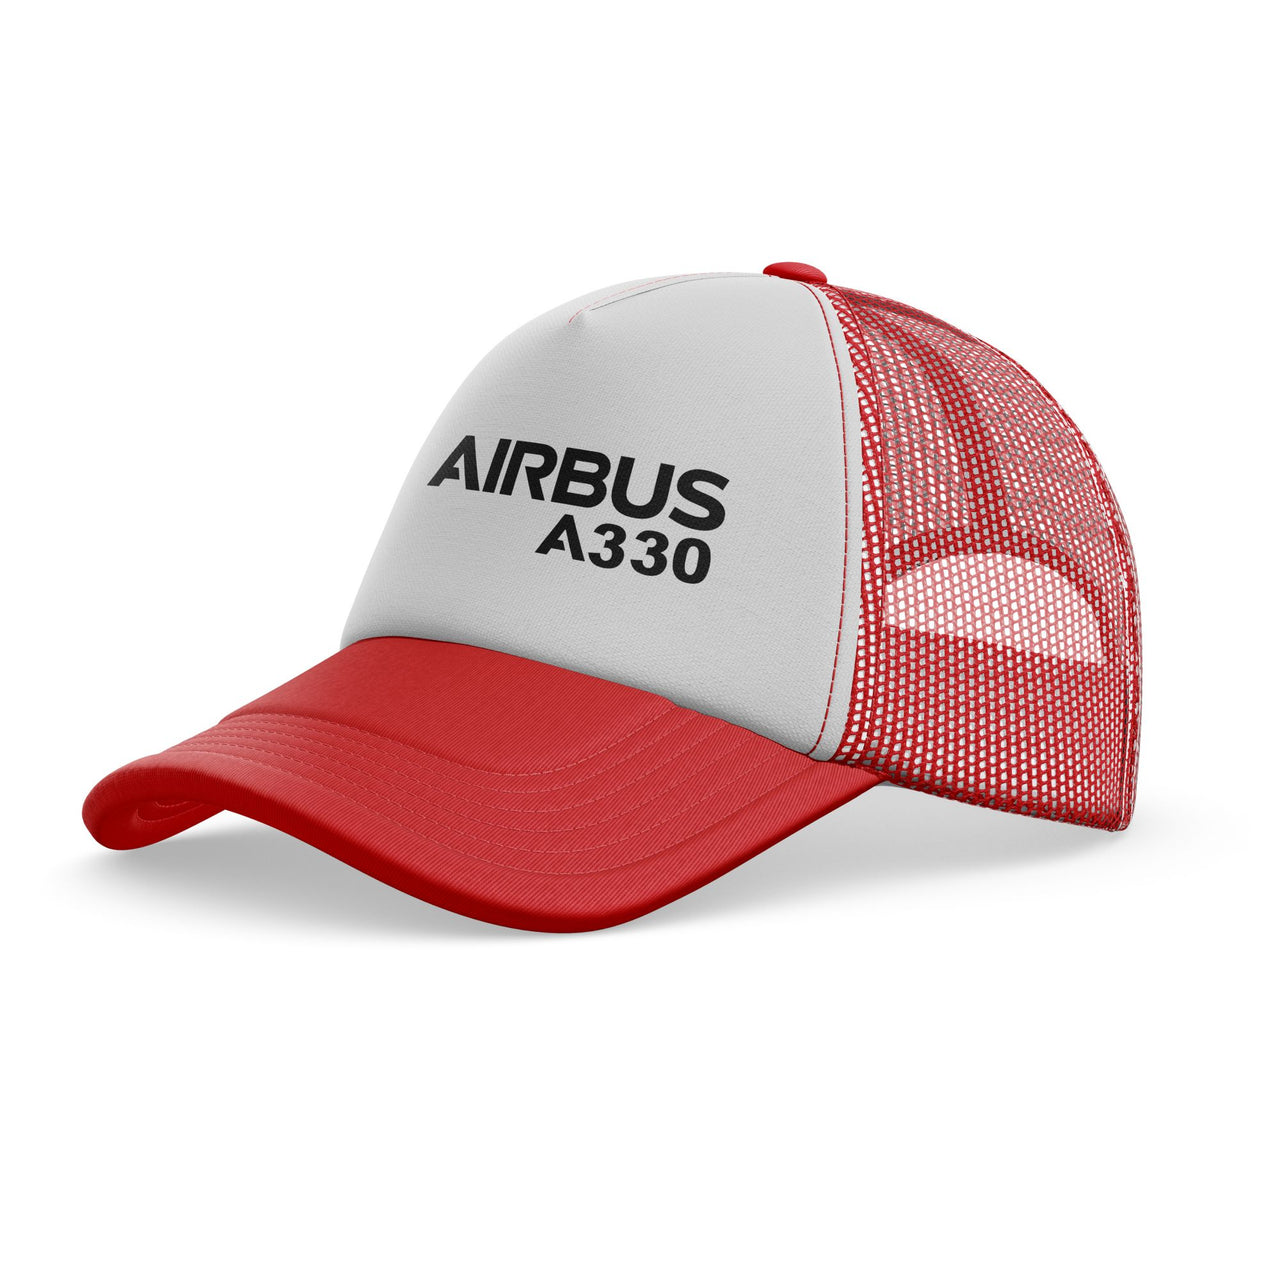 Airbus A330 & Text Designed Trucker Caps & Hats